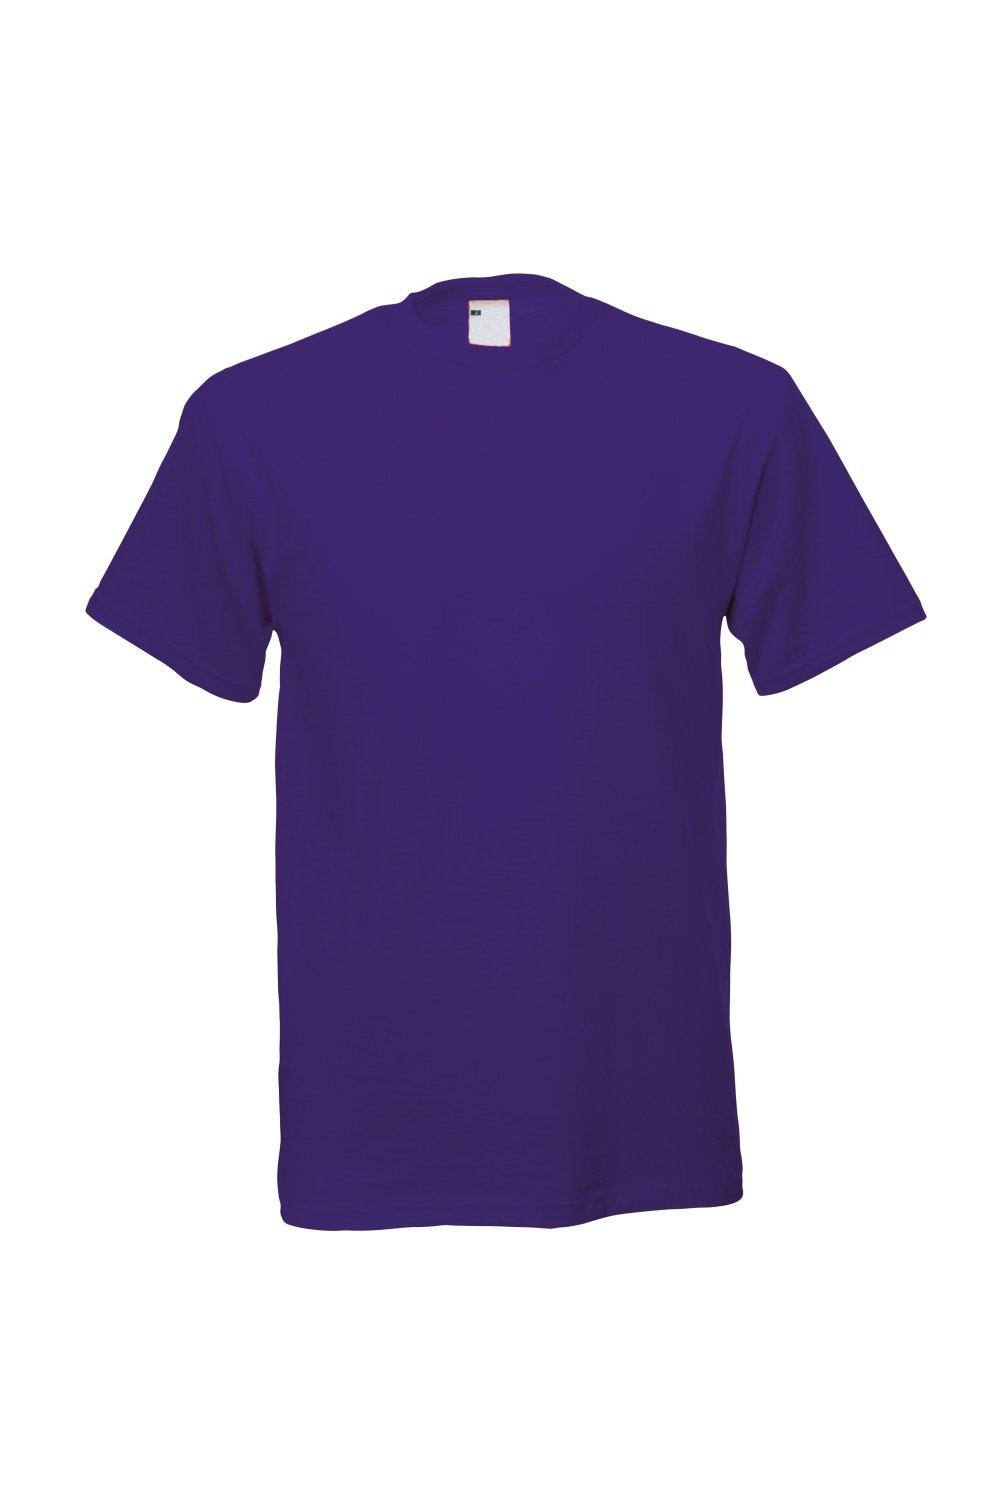 Повседневная футболка с коротким рукавом Universal Textiles, фиолетовый повседневная футболка с коротким рукавом universal textiles синий